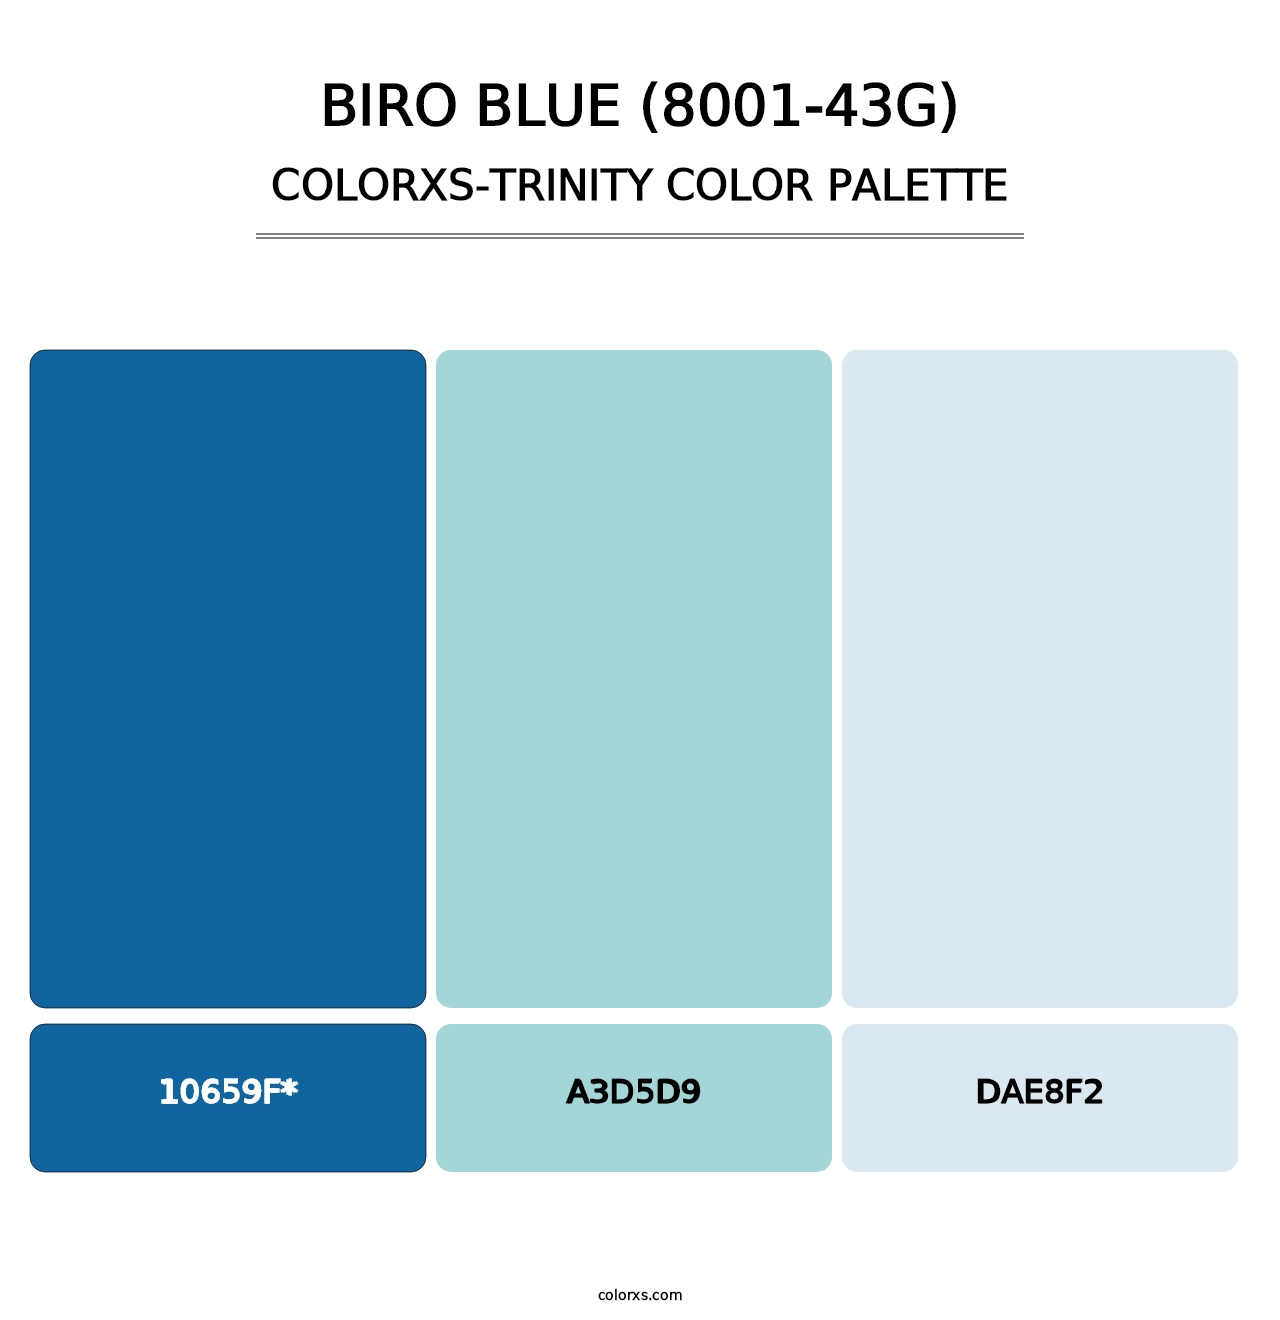 Biro Blue (8001-43G) - Colorxs Trinity Palette